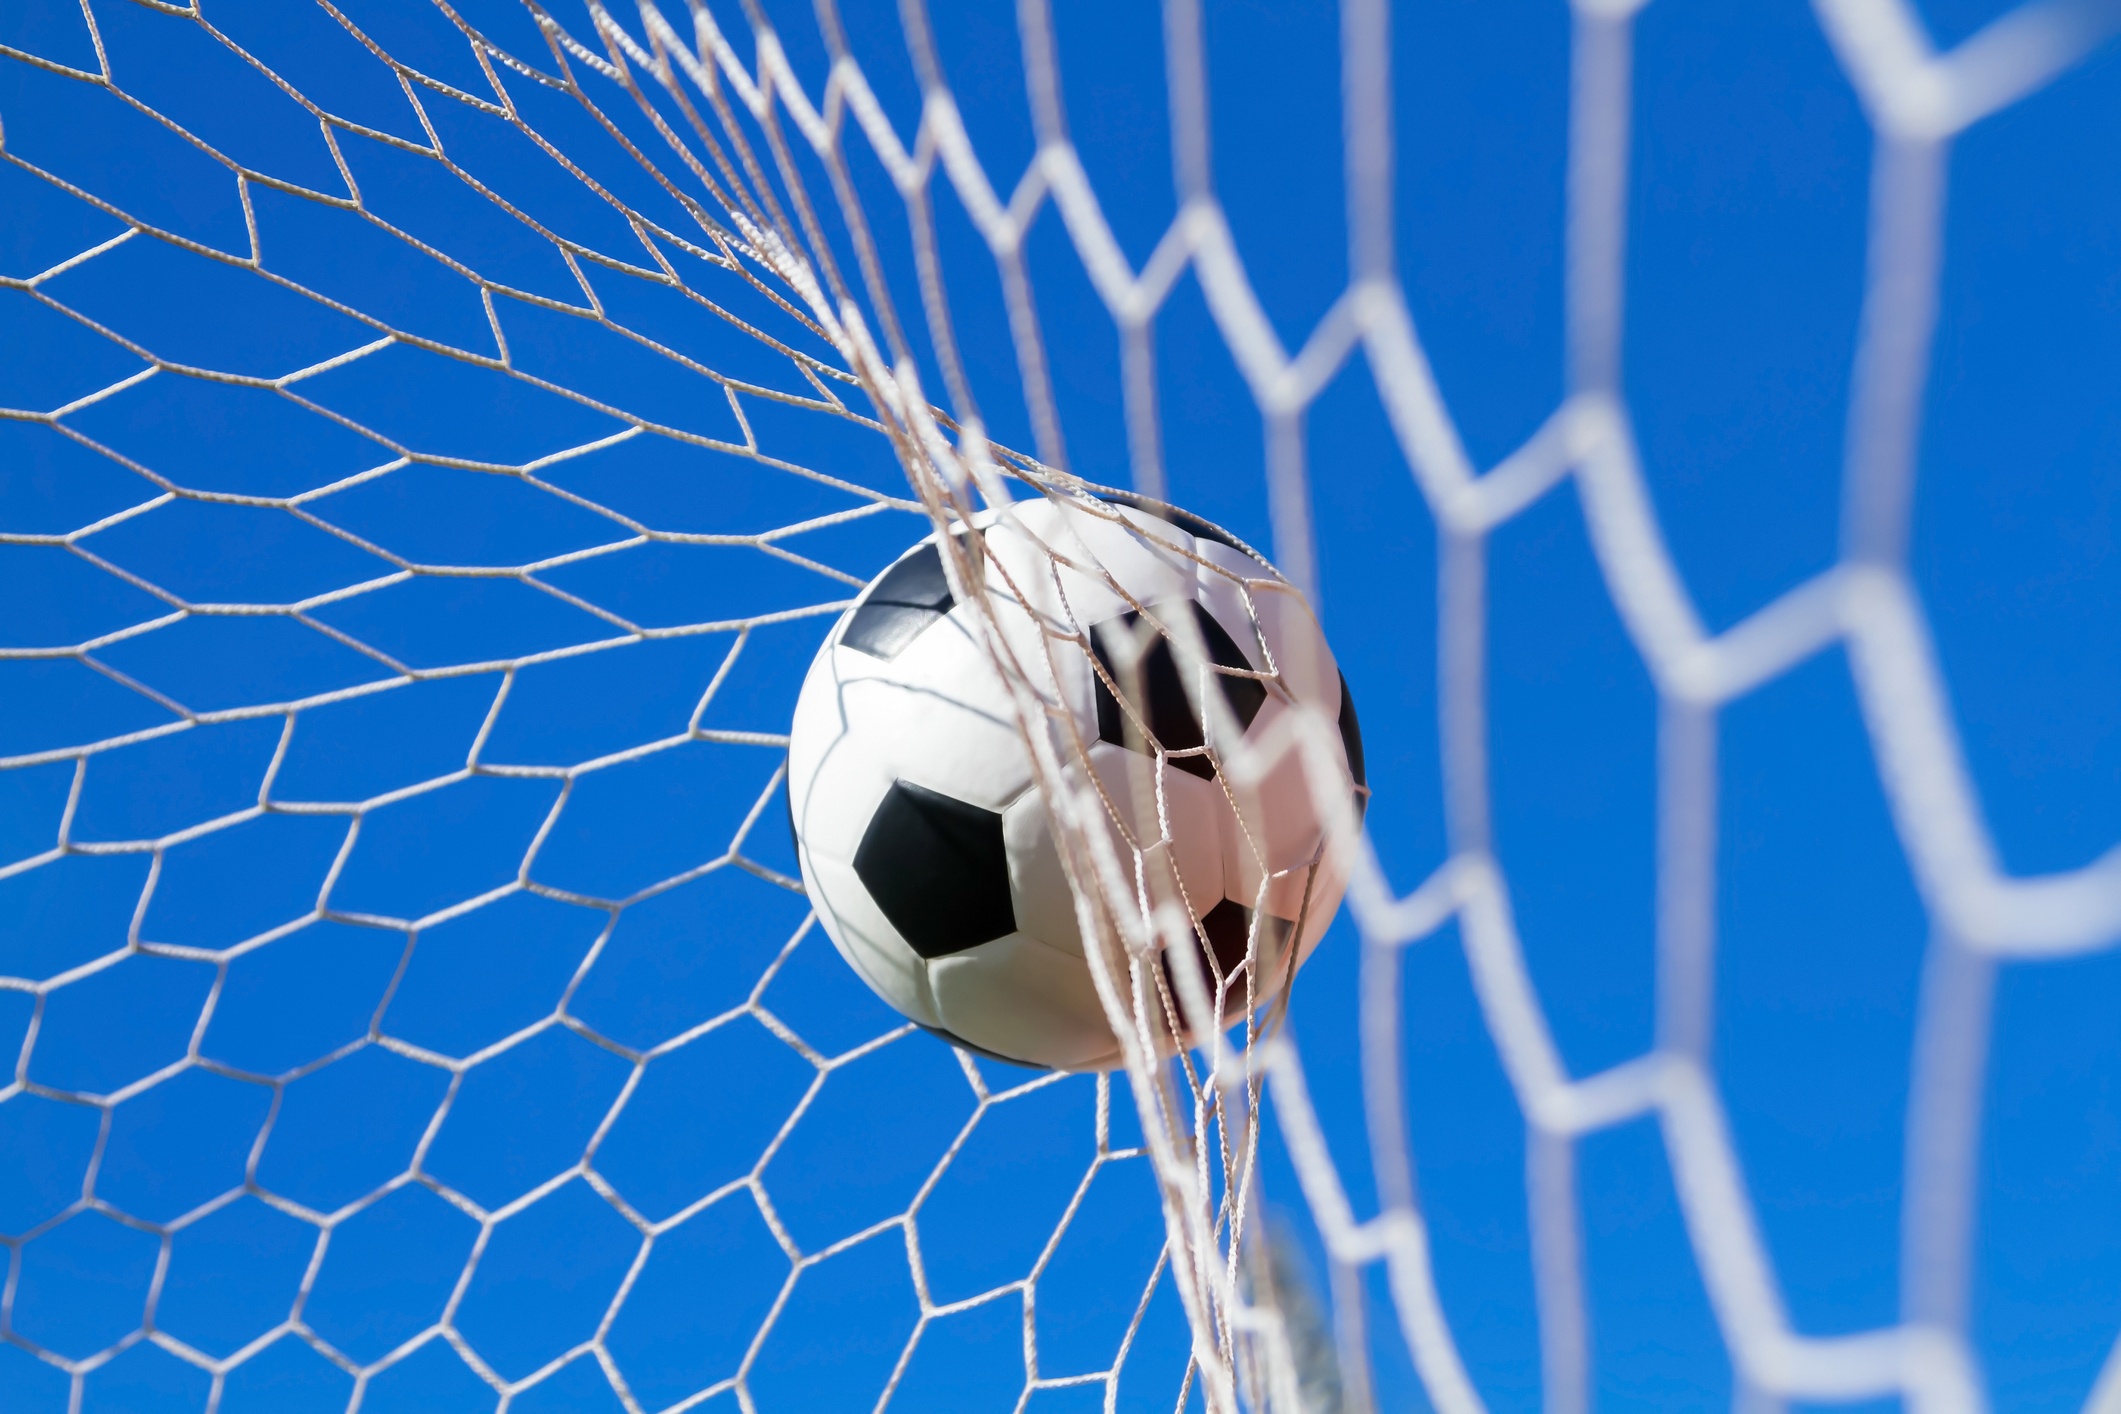 soccer ball scoring a goal in net